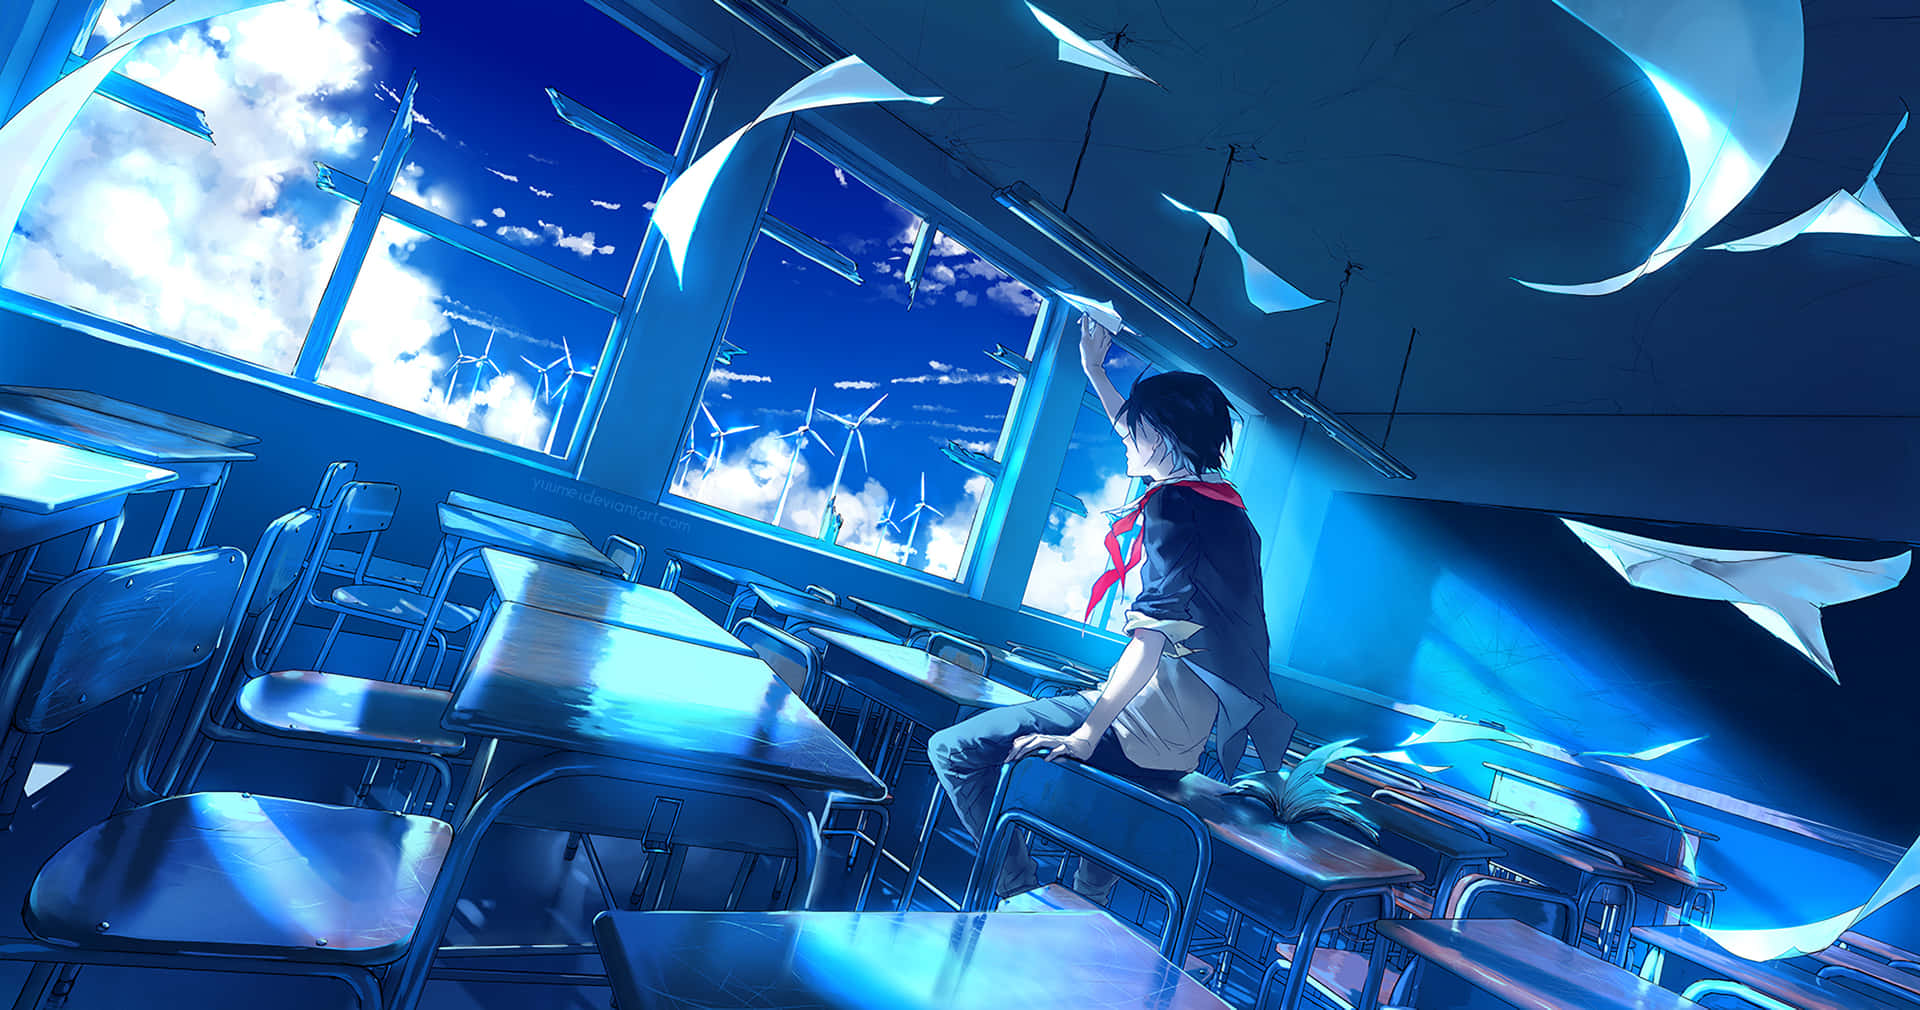 Desolate Anime Classroom Wallpaper